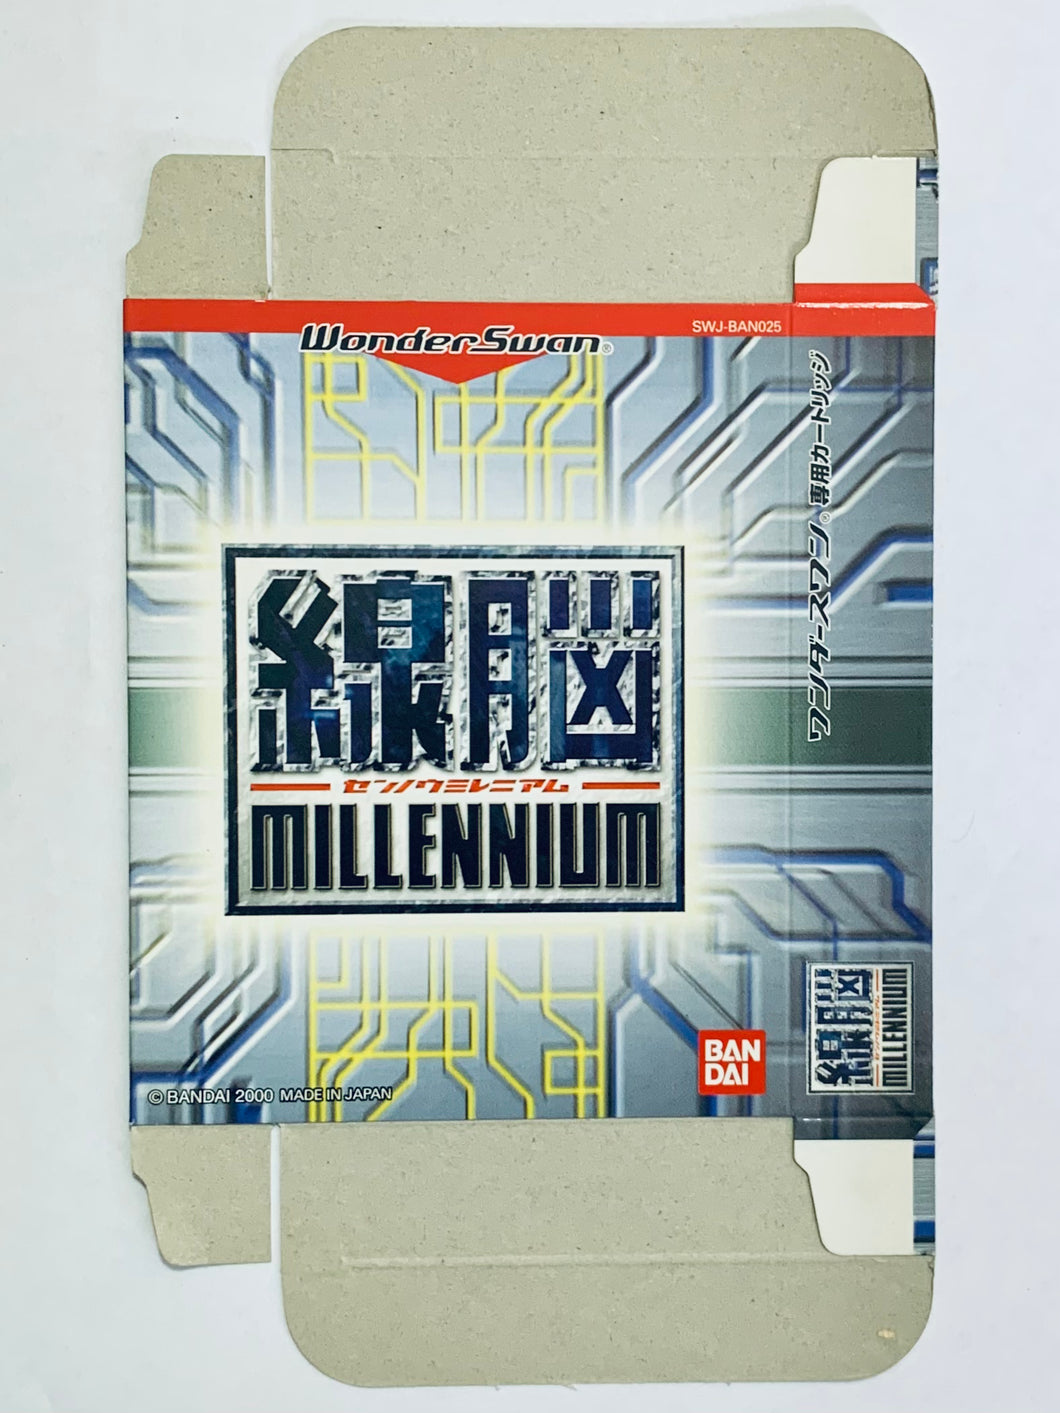 Sennou Millenium - WonderSwan Color - WSC - JP - Box Only (SWJ-BAN025)